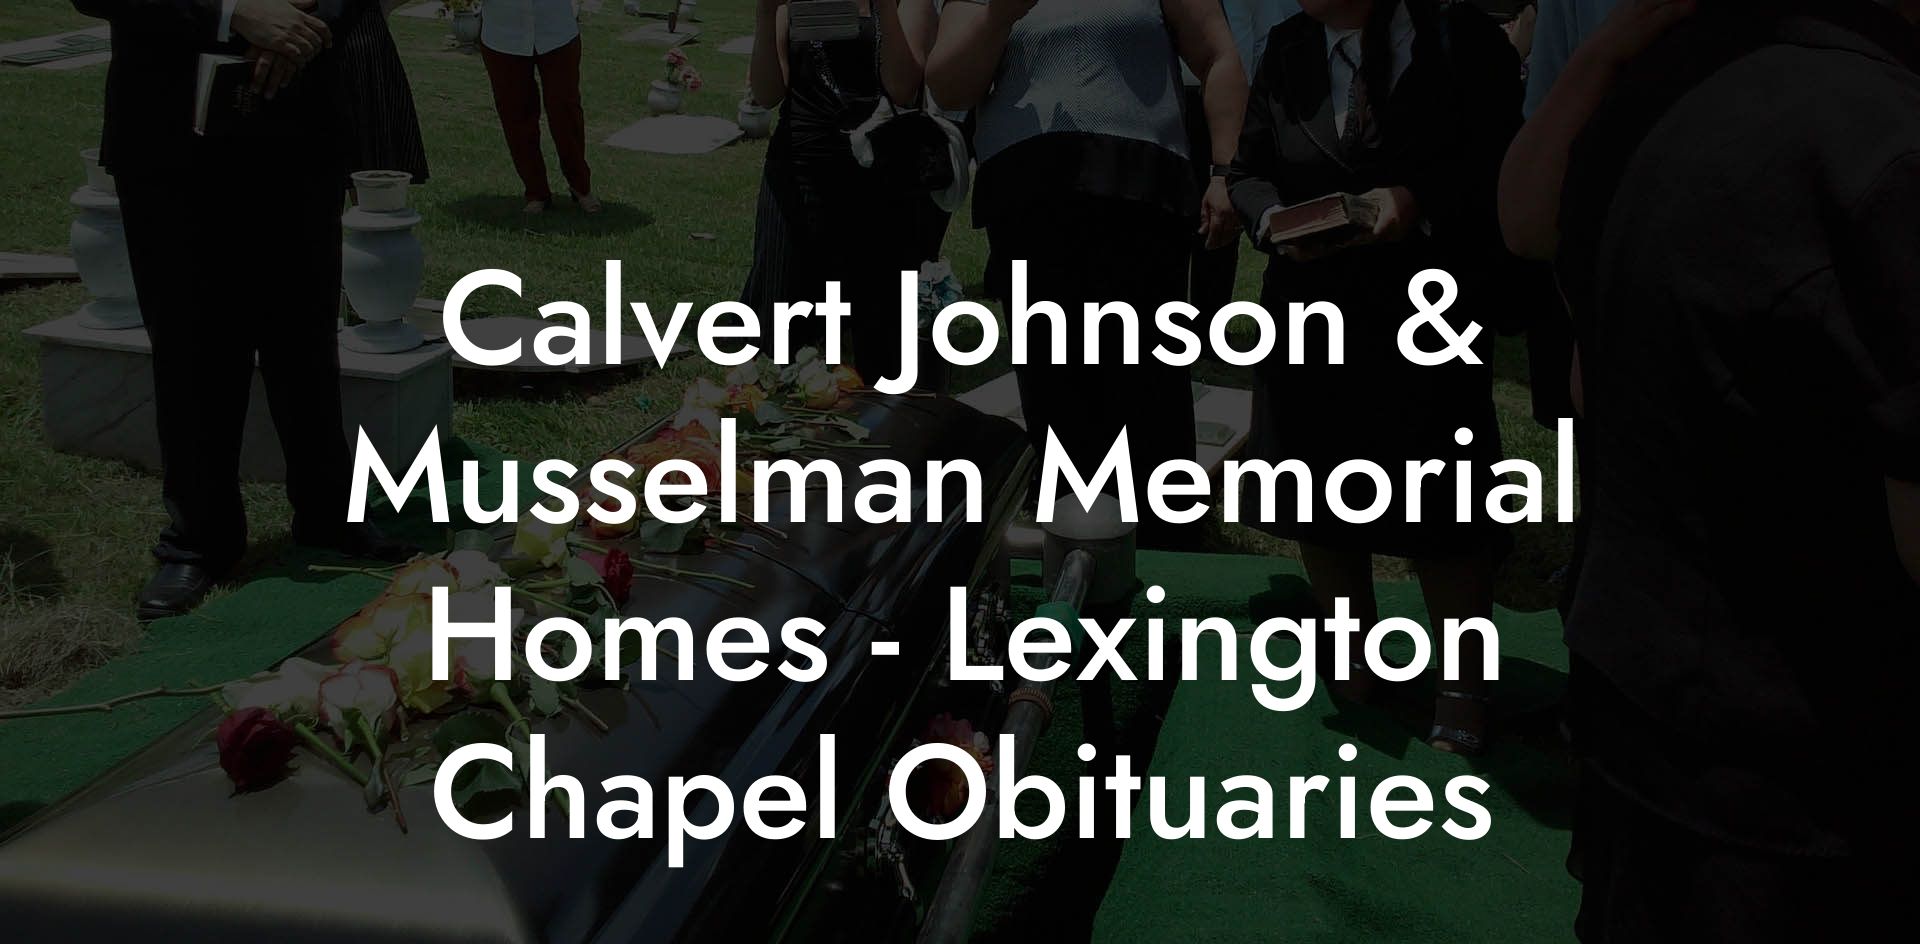 Calvert Johnson & Musselman Memorial Homes - Lexington Chapel Obituaries